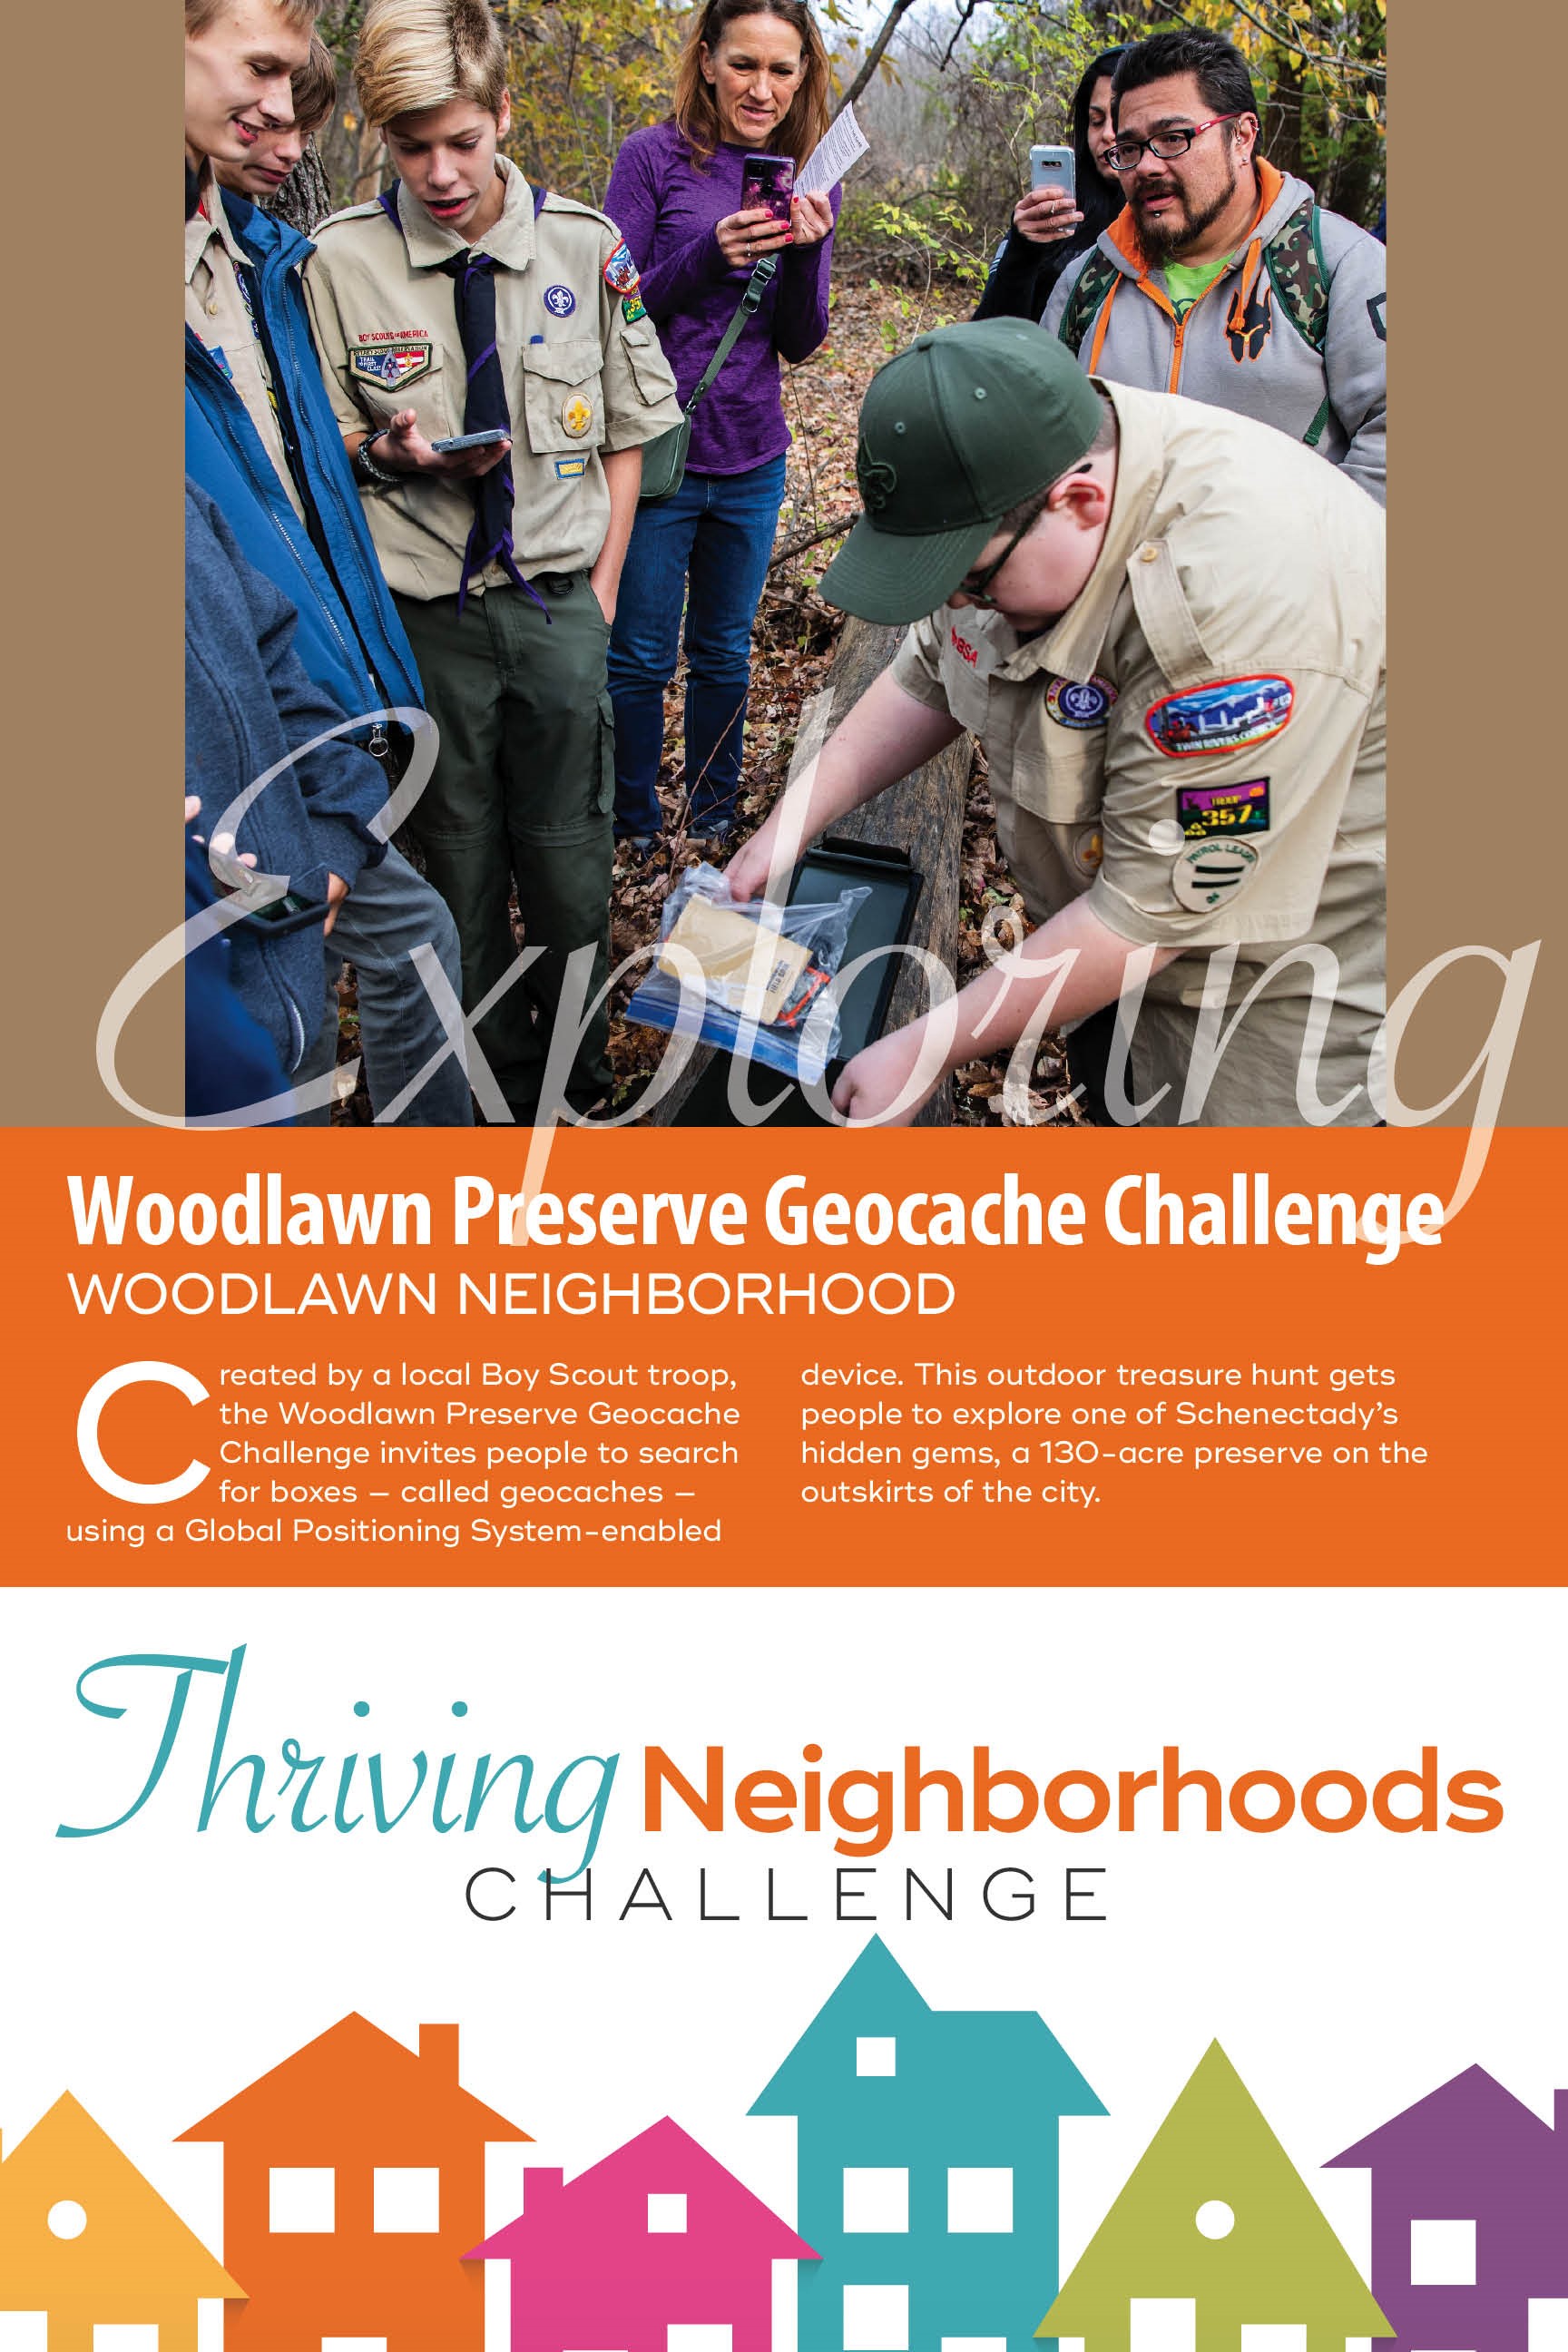 Uploaded Image: /vs-uploads/thrivingchallenge/TNC - Woodlawn Park Geocache Challenge Board.jpg